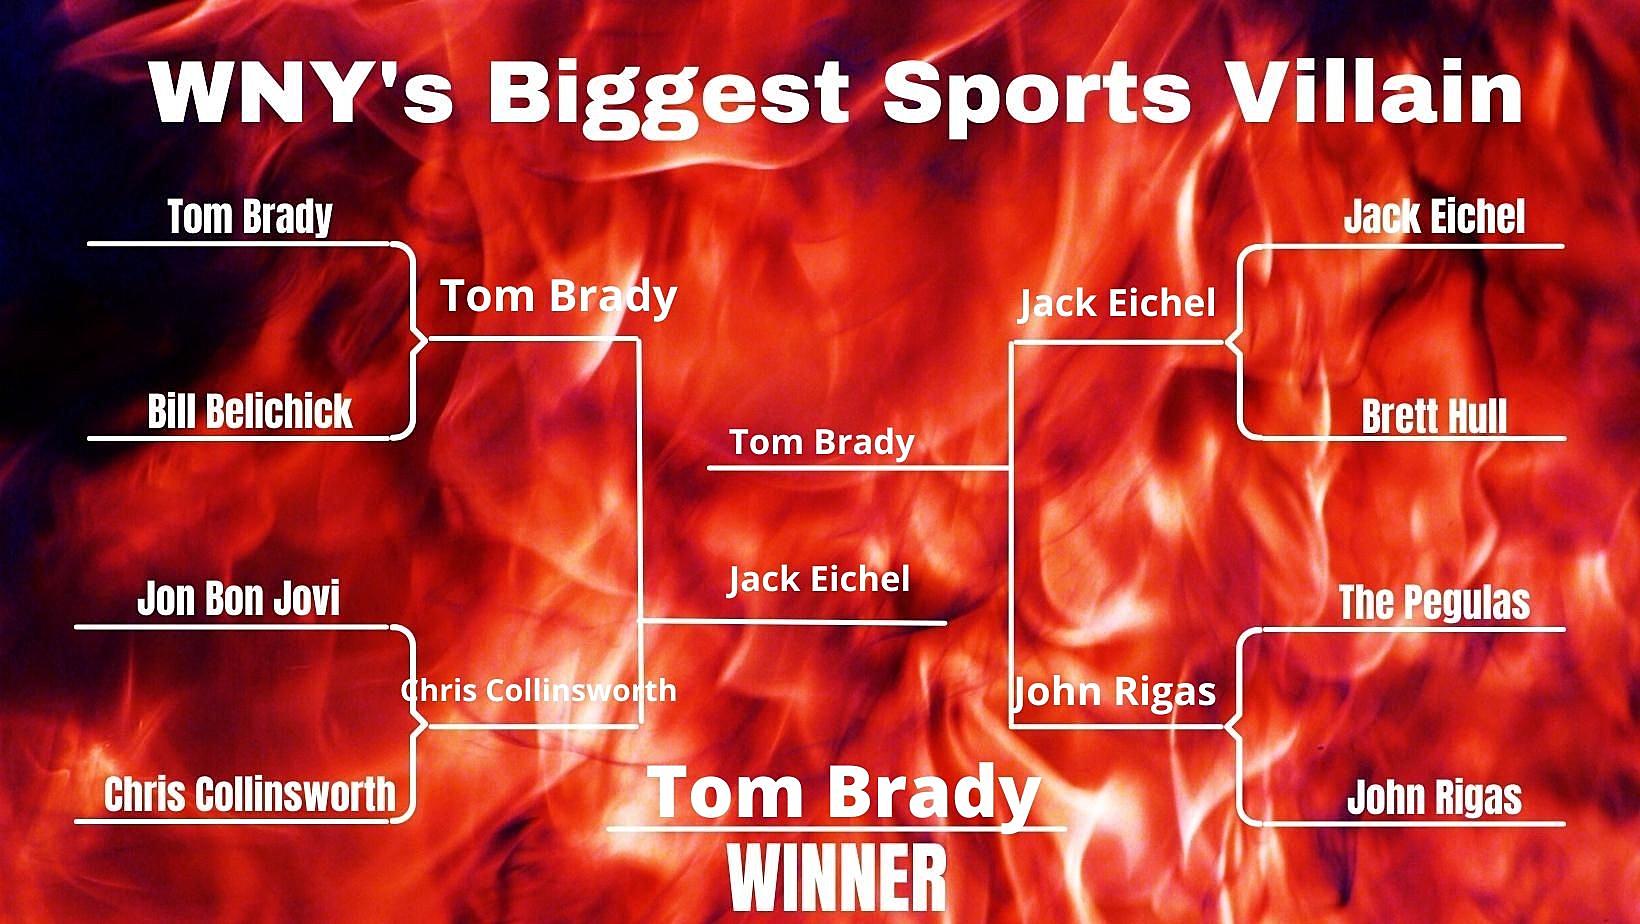 Tom Brady was a unique Philadelphia sports villain against the